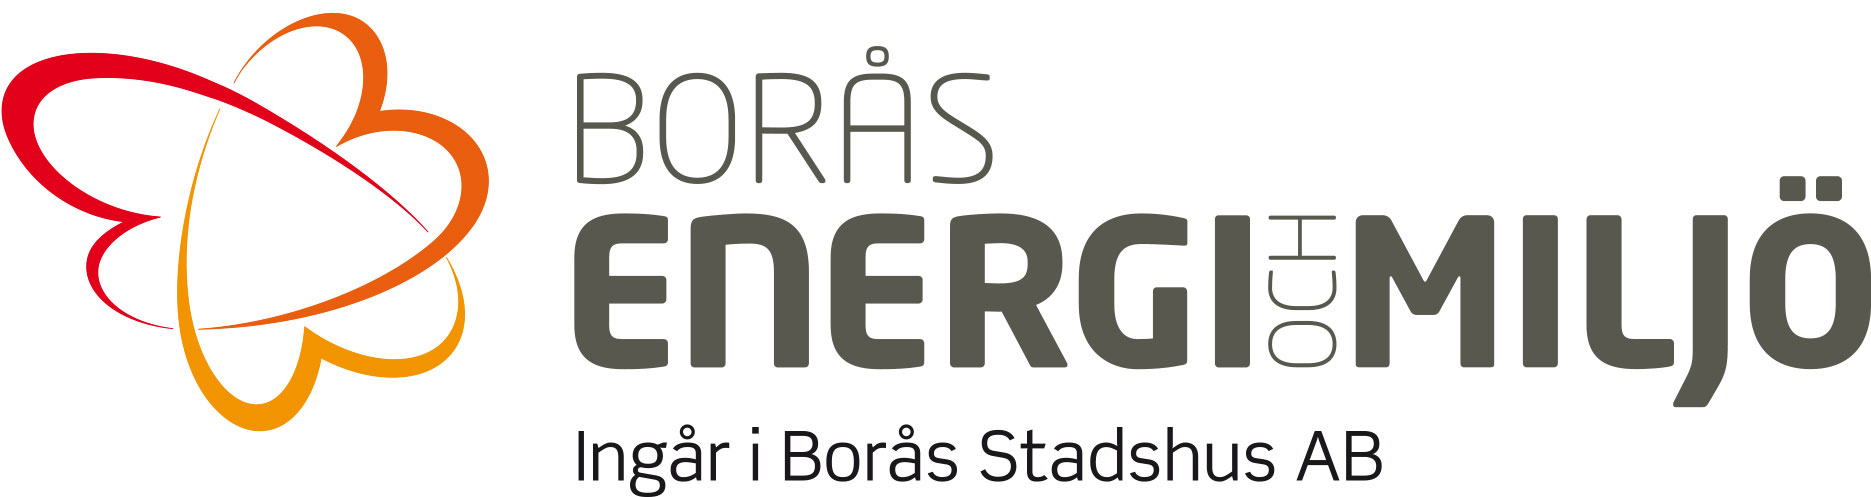 Borås Energi och Miljö Ingår i Borås Stadshus AB